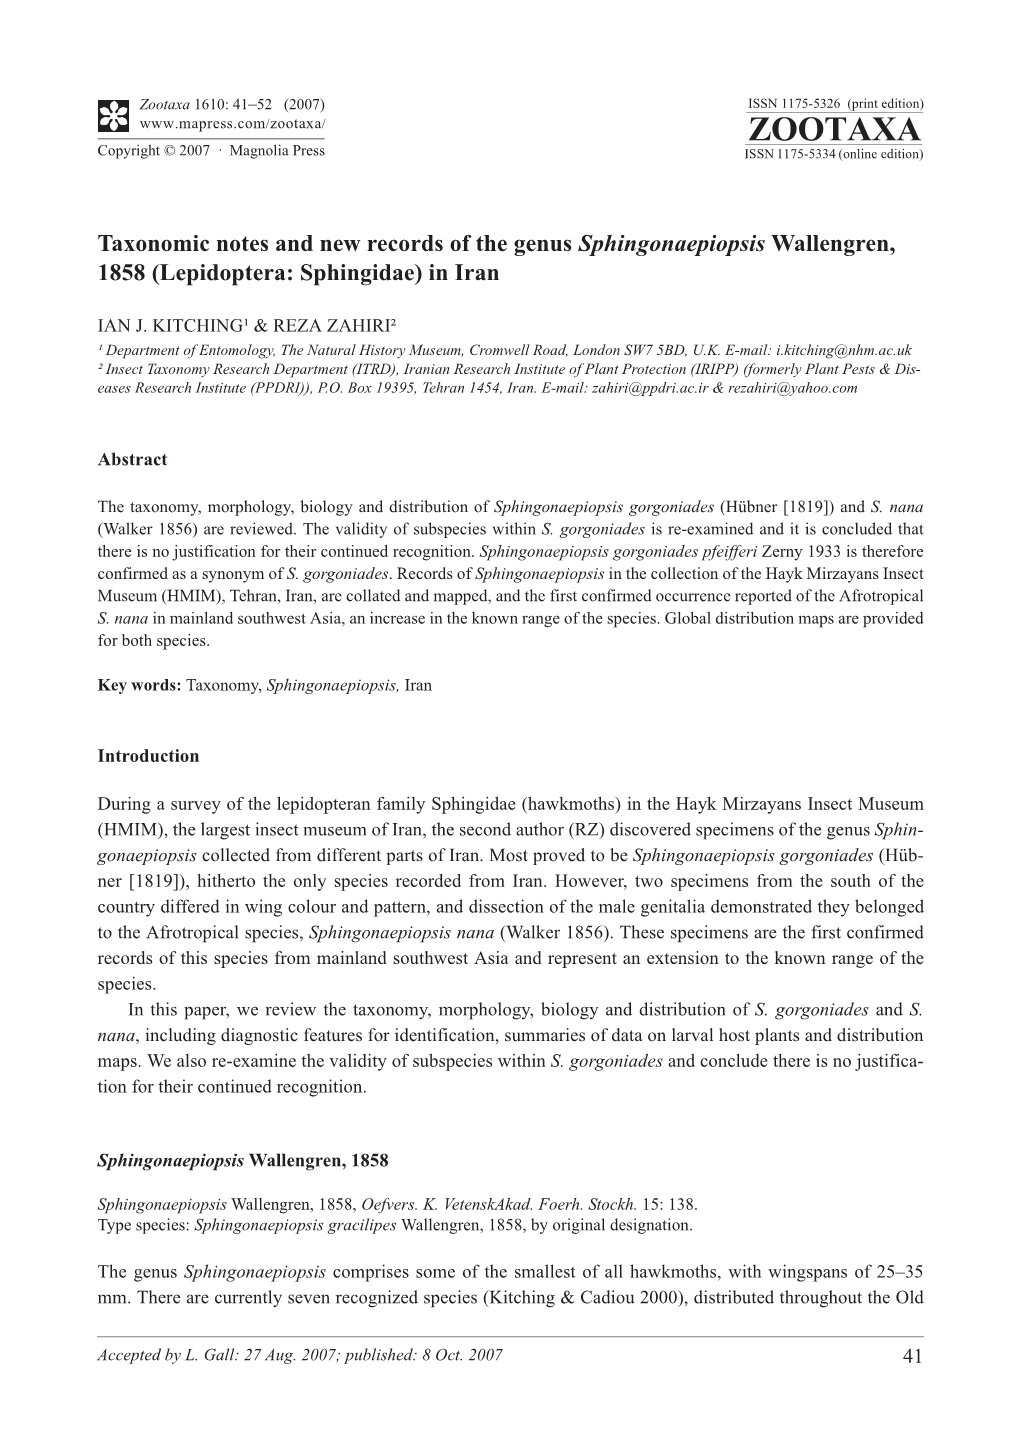 Zootaxa,Taxonomic Notes and New Records of the Genus Sphingonaepiopsis Wallengren